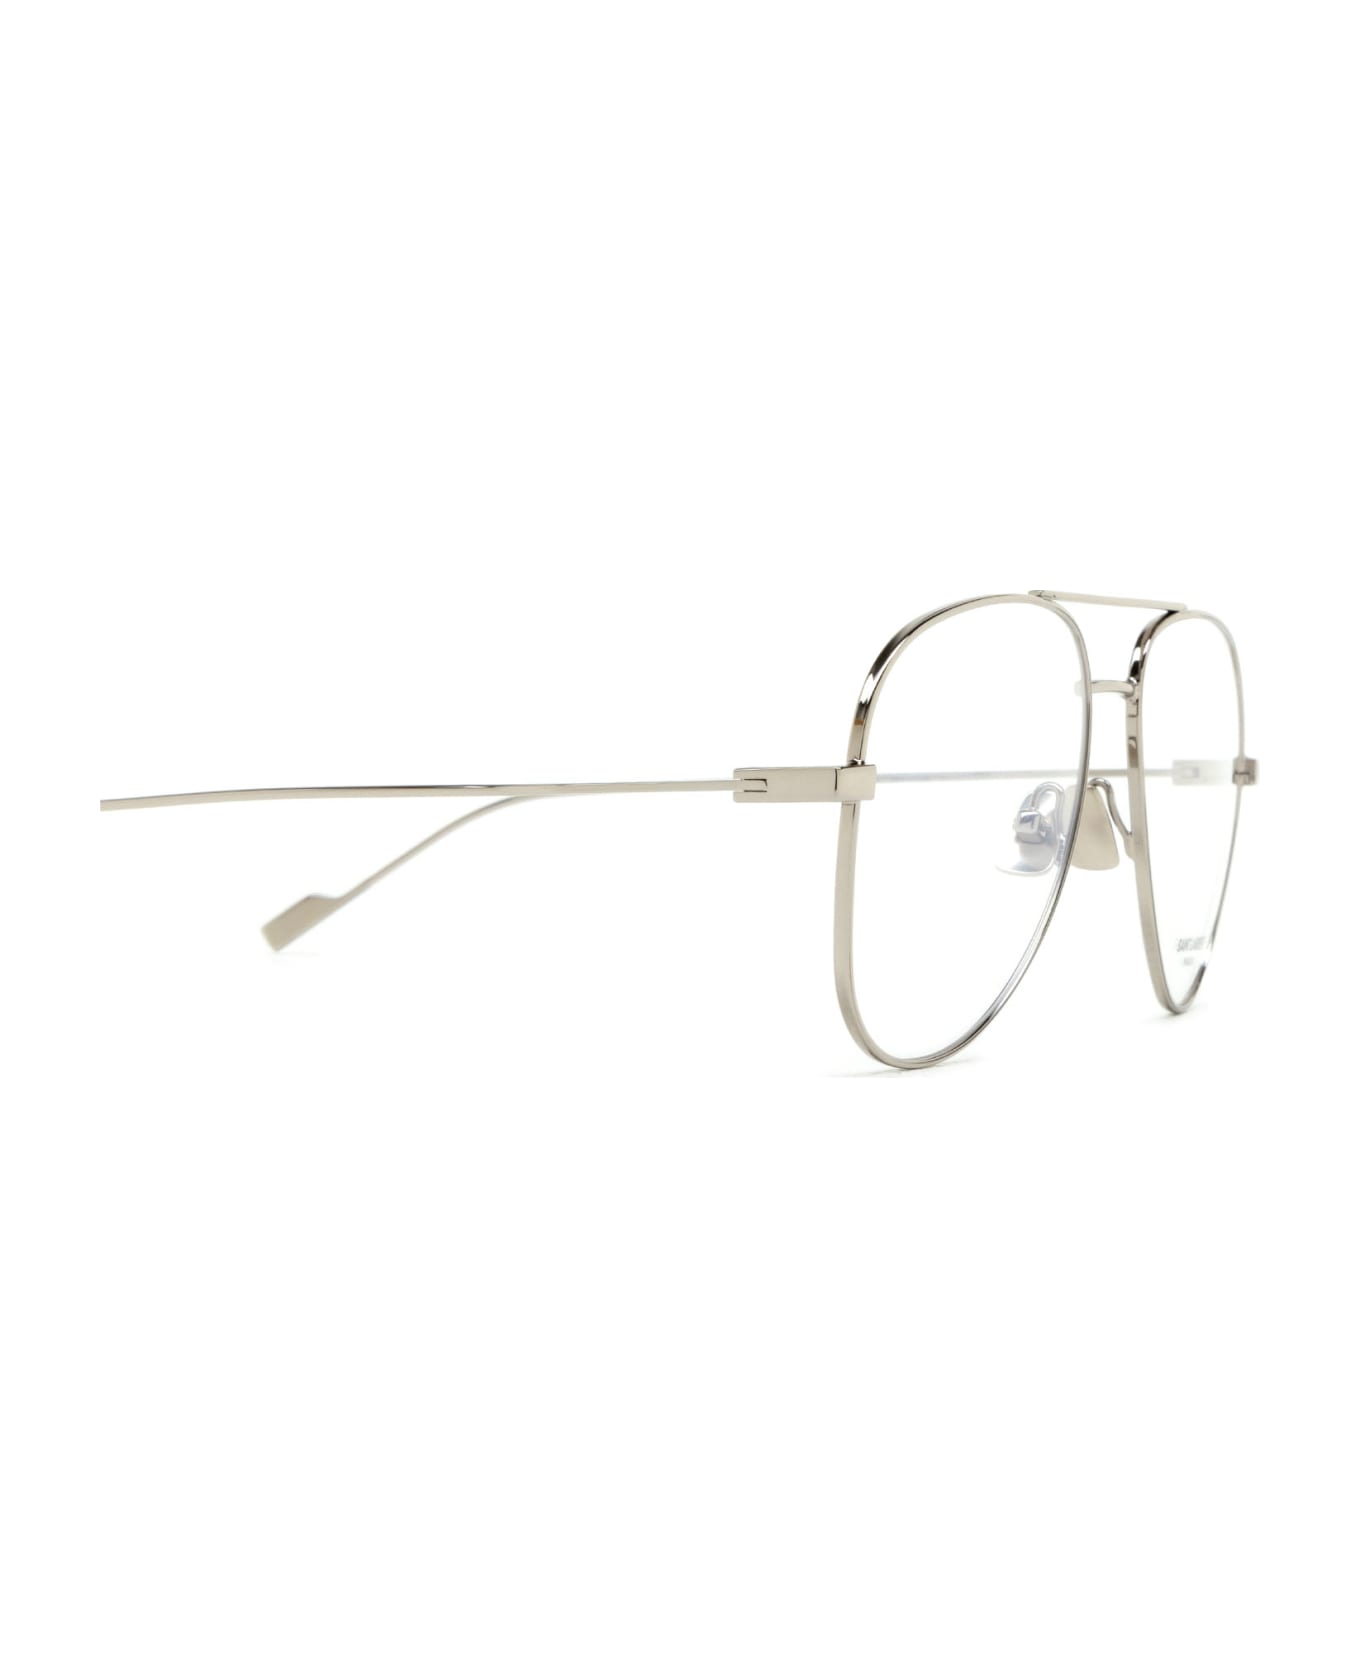 Saint Laurent Eyewear Classic 11 Ysl Silver Glasses - Silver アイウェア